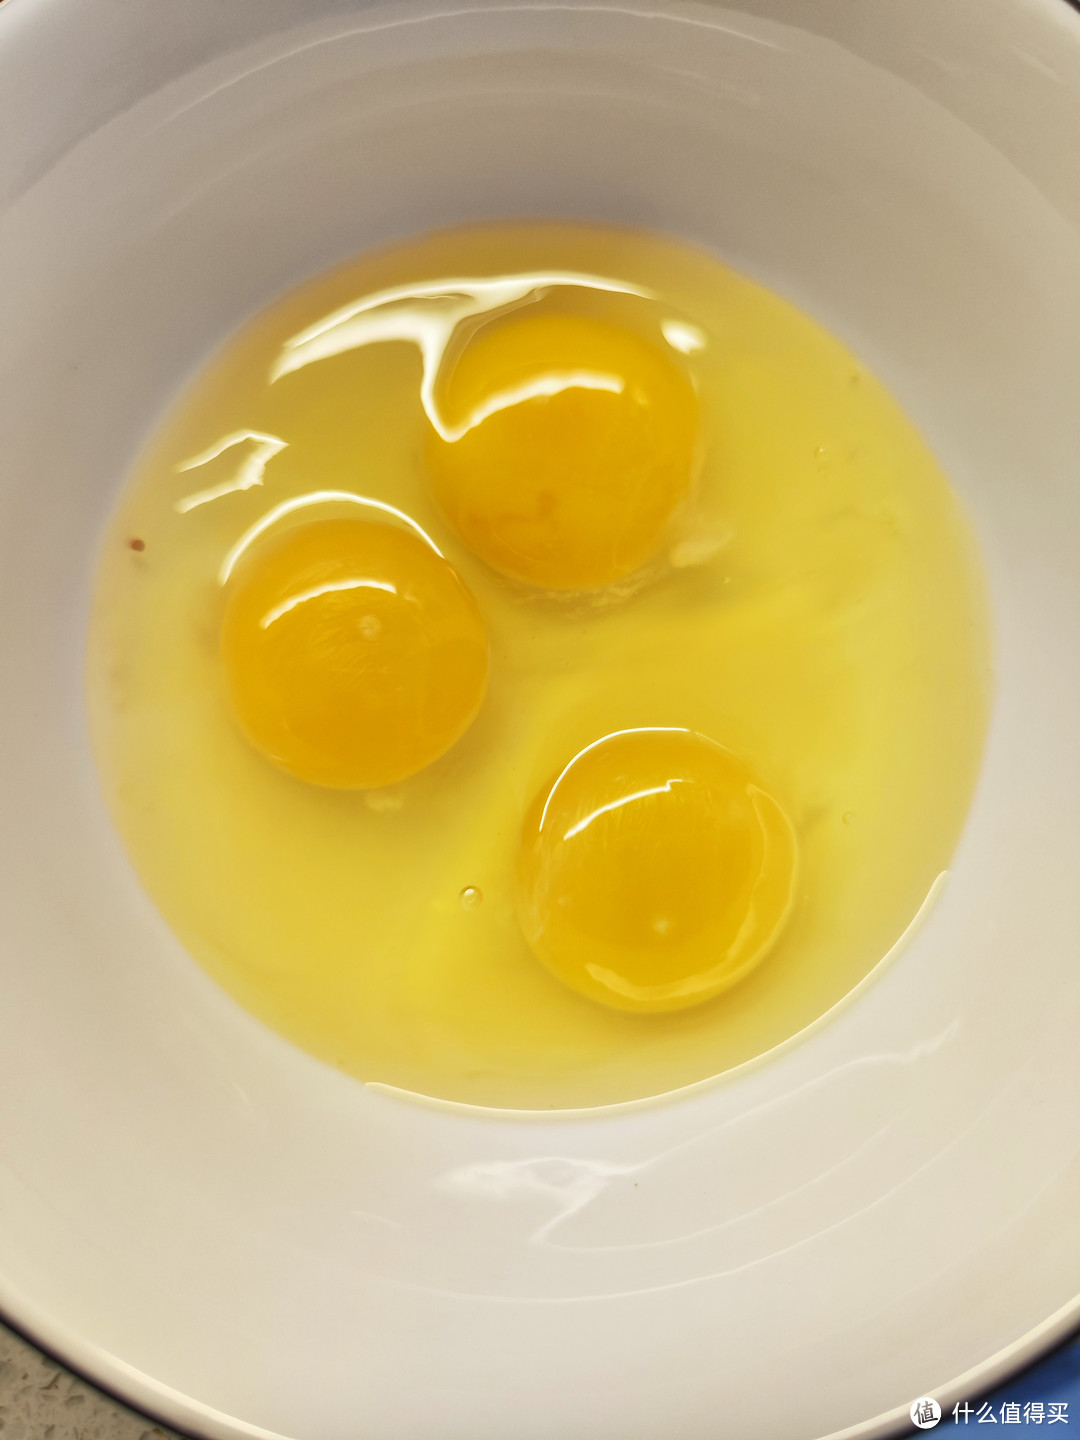 鸡蛋入碗